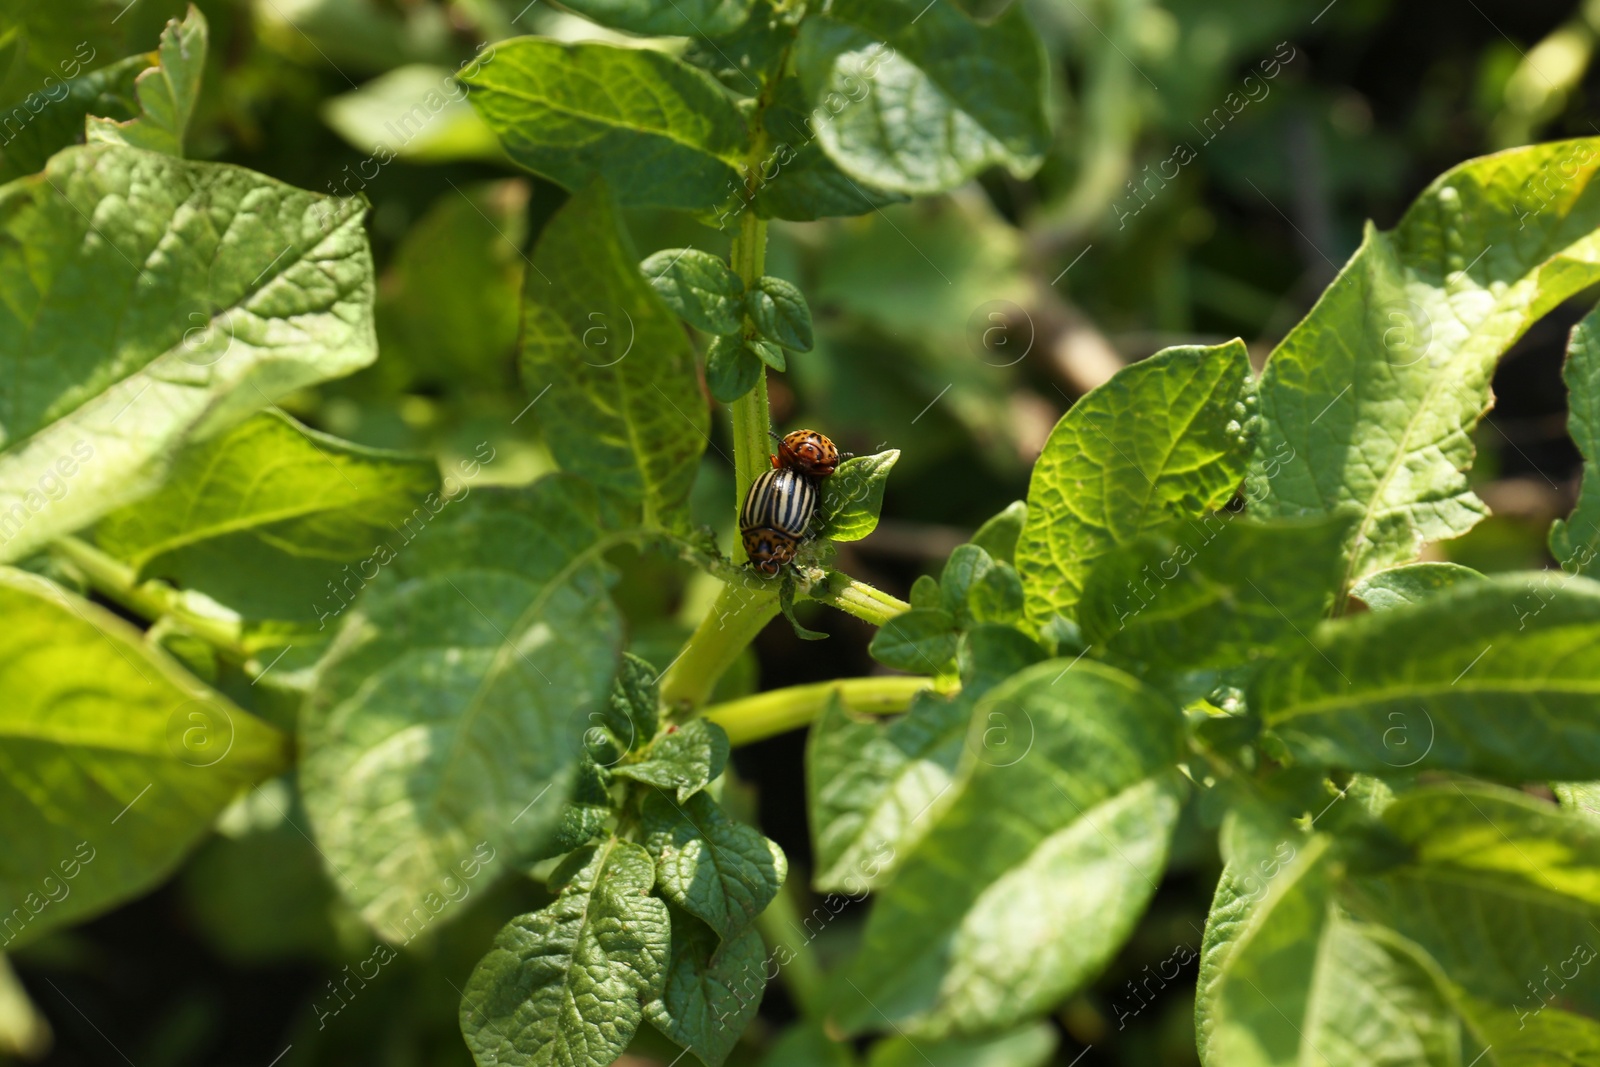 Photo of Colorado potato beetles on green plant outdoors